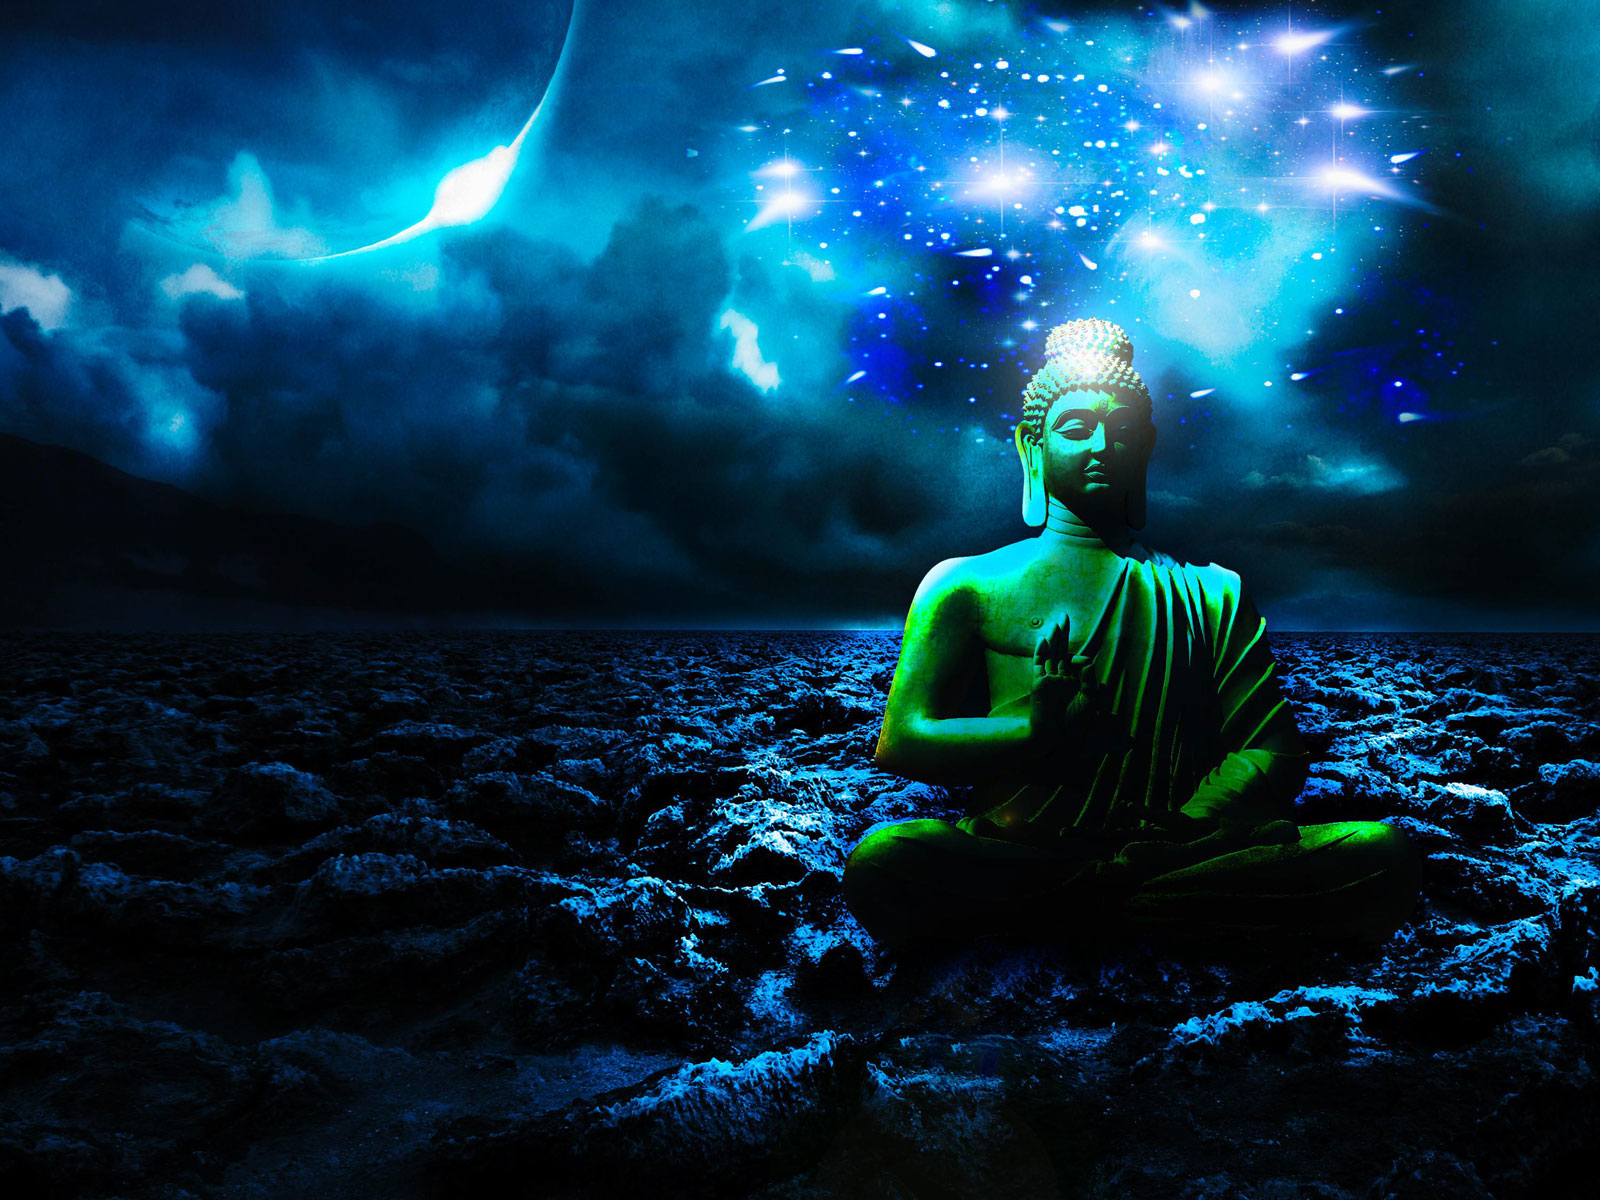 Meditation Buddha Wallpaper Images  Free Download on Freepik